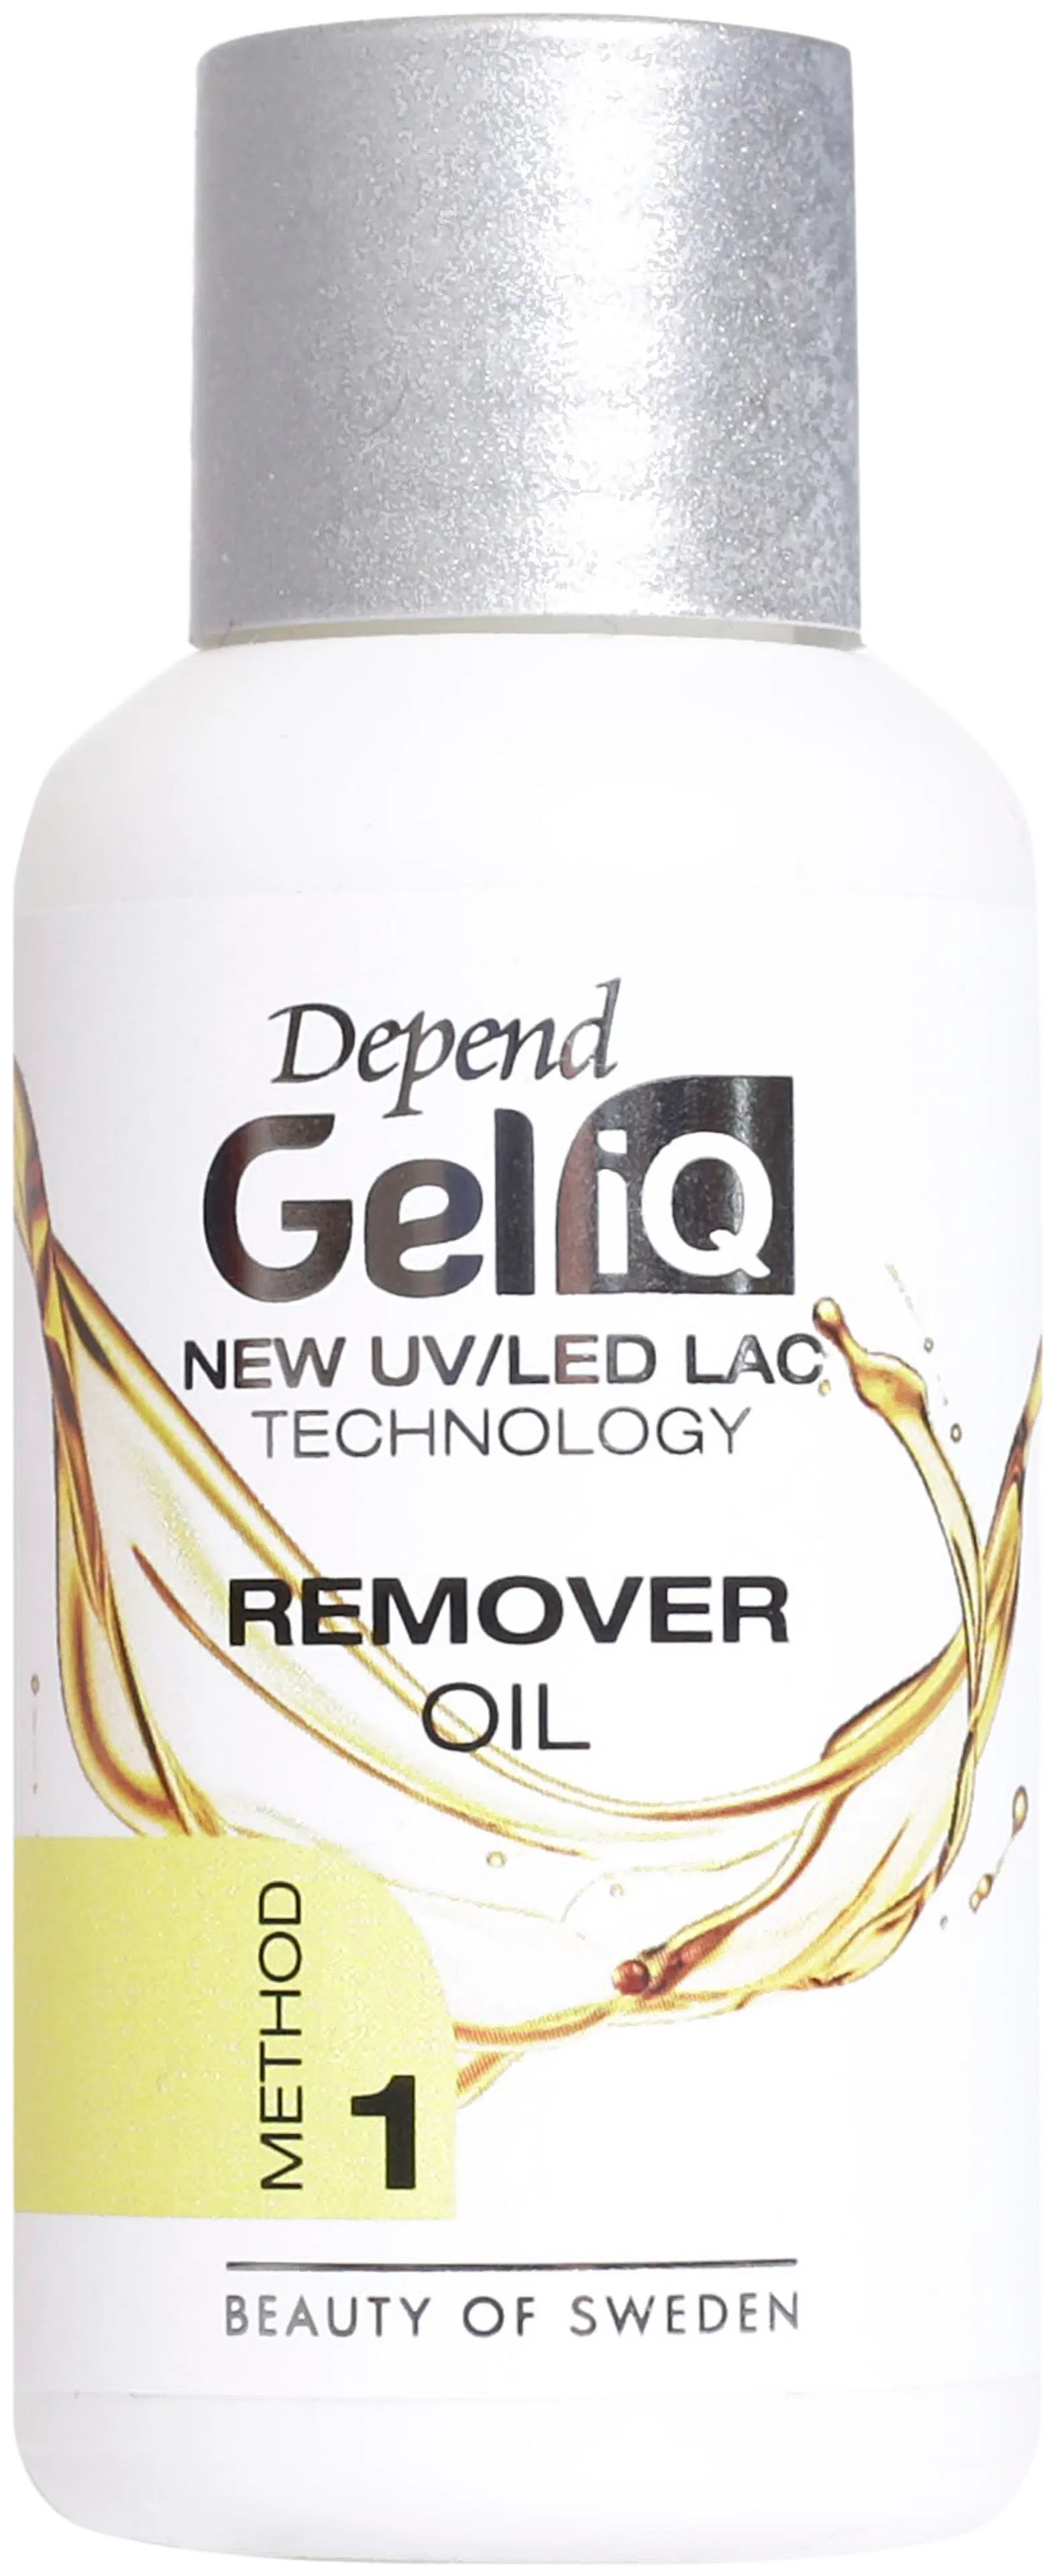 Depend Gel iQ Remover Oil 35 ml nr 2903